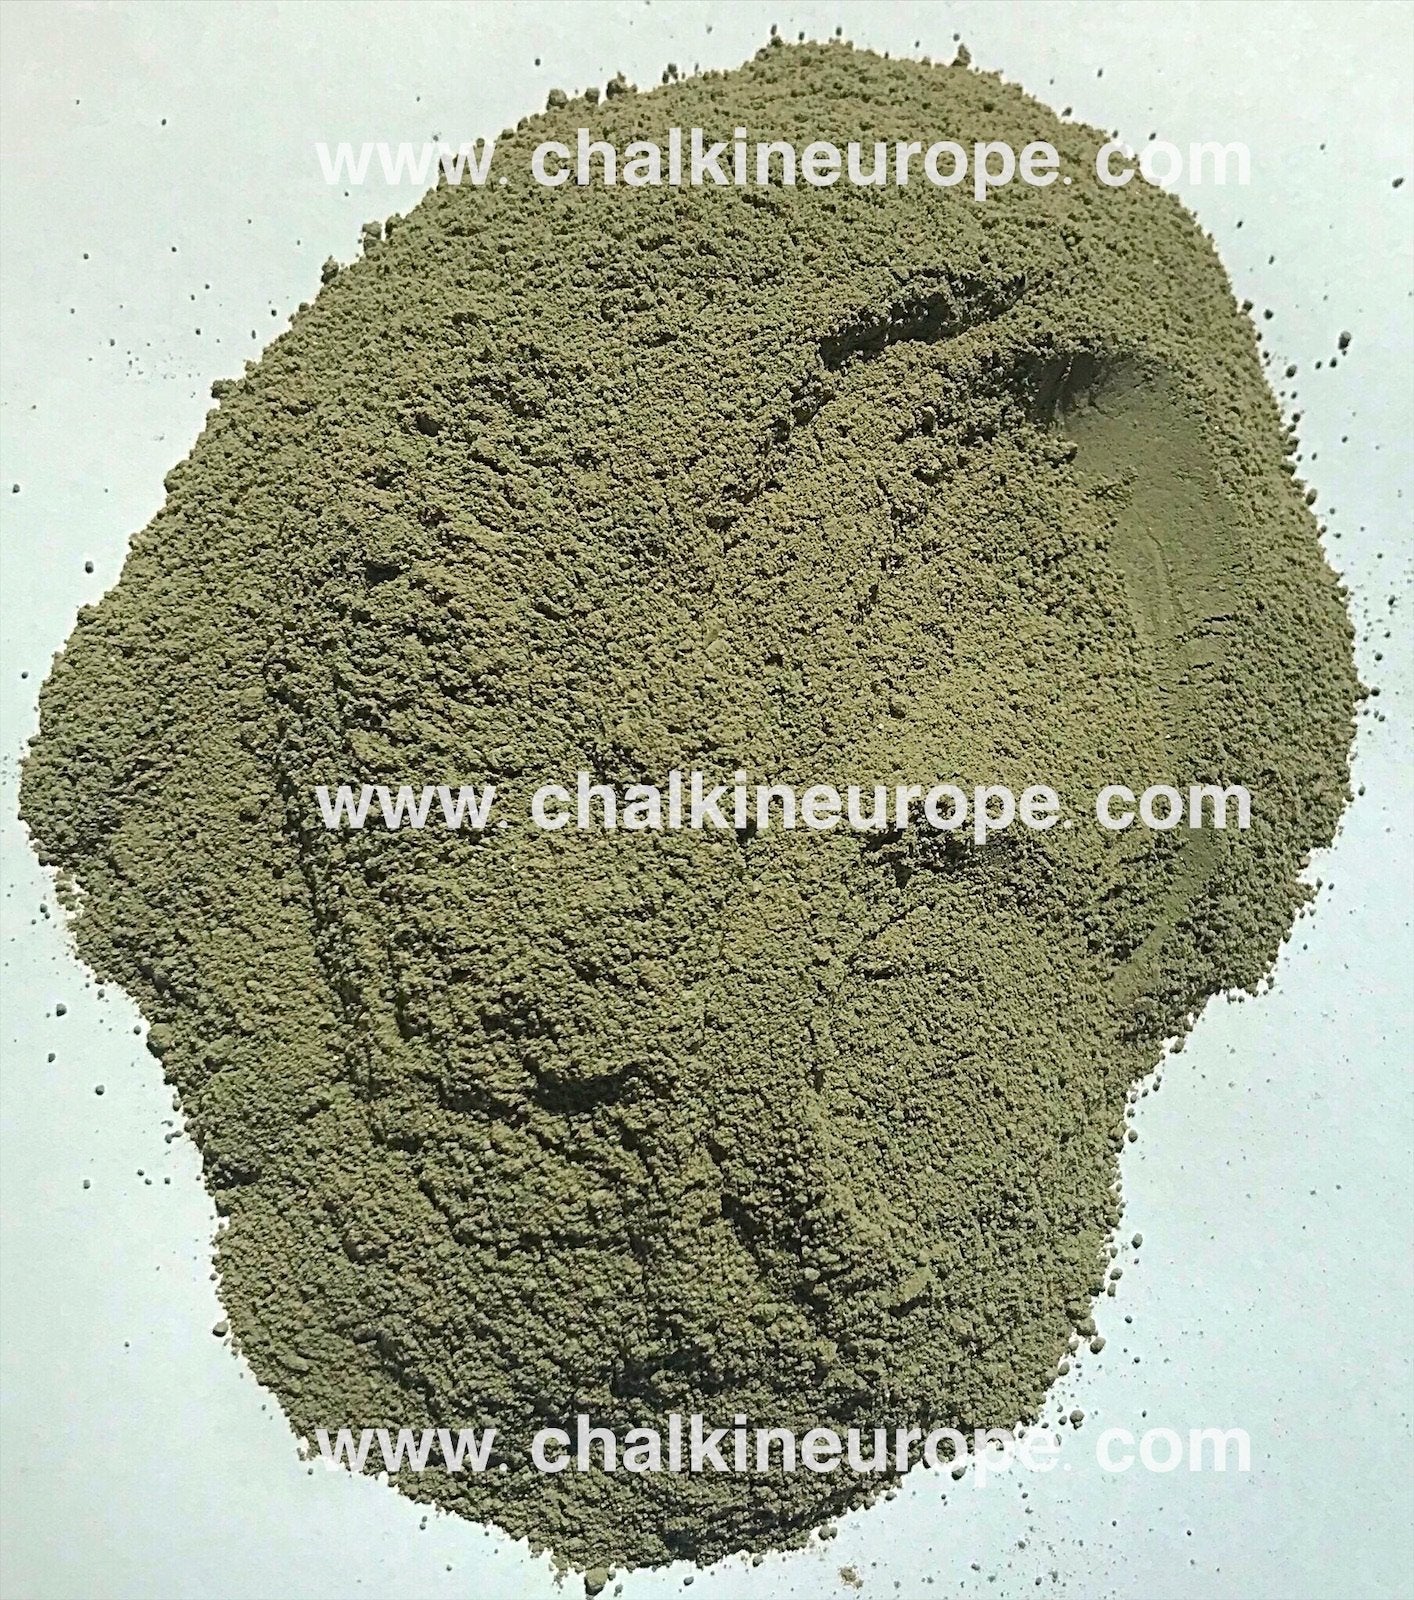 Edible chalk : KRAM edible Chalk chunks (lump) natural for eating (food)